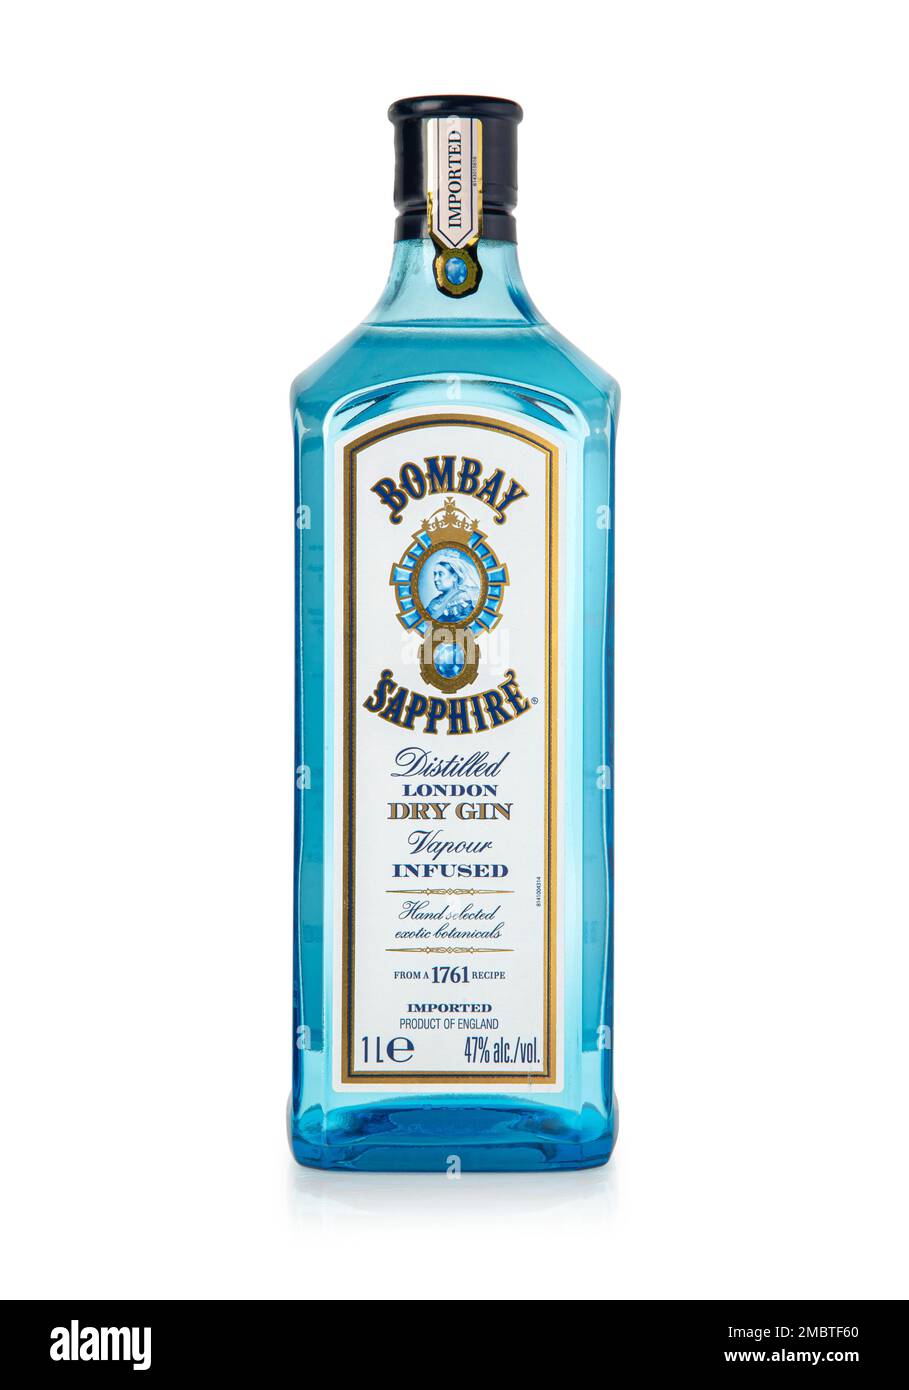 Chisinau, Moldova March 02, 2021: Bombay Sapphire Gin bottle on a white  background Stock Photo